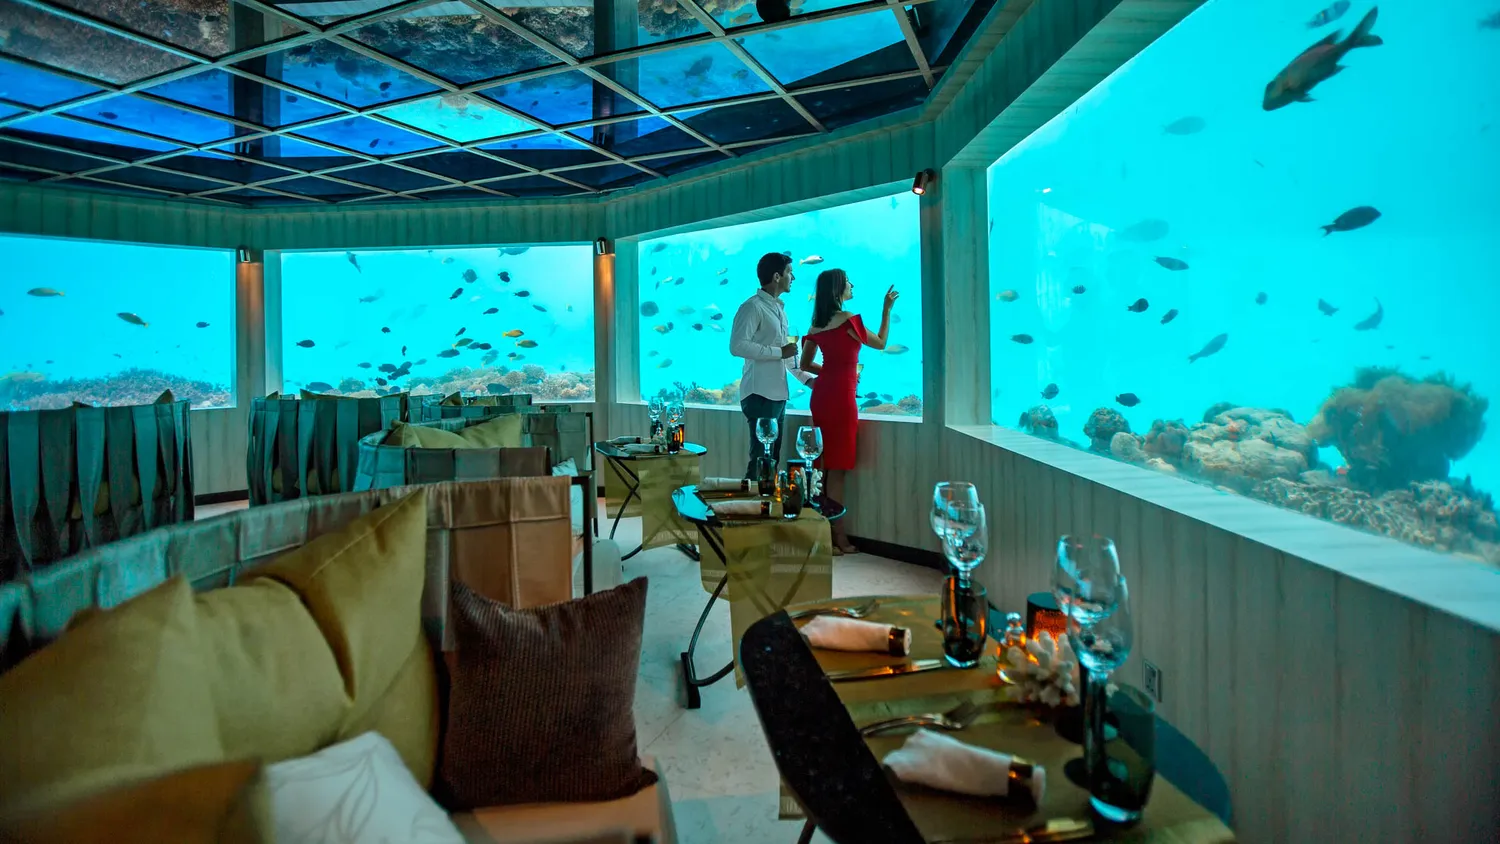 m6m-restaurant-maldives-theworldkeys-1-1-1704706901.jpg